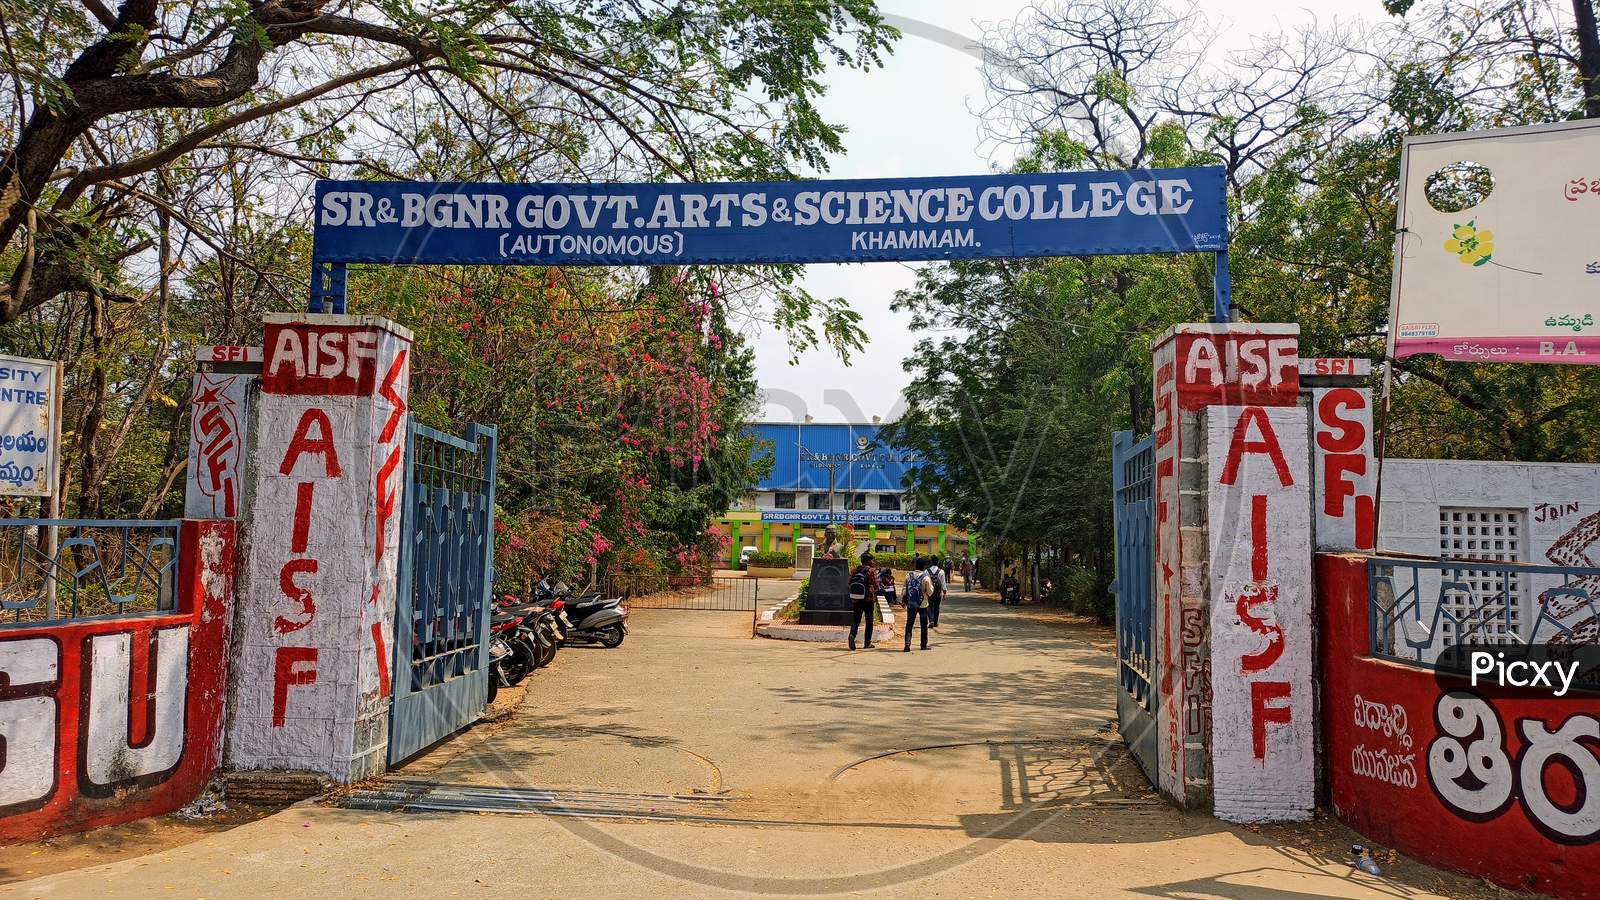 SR & BGNR Government Arts & Science College Khammam Telangana India